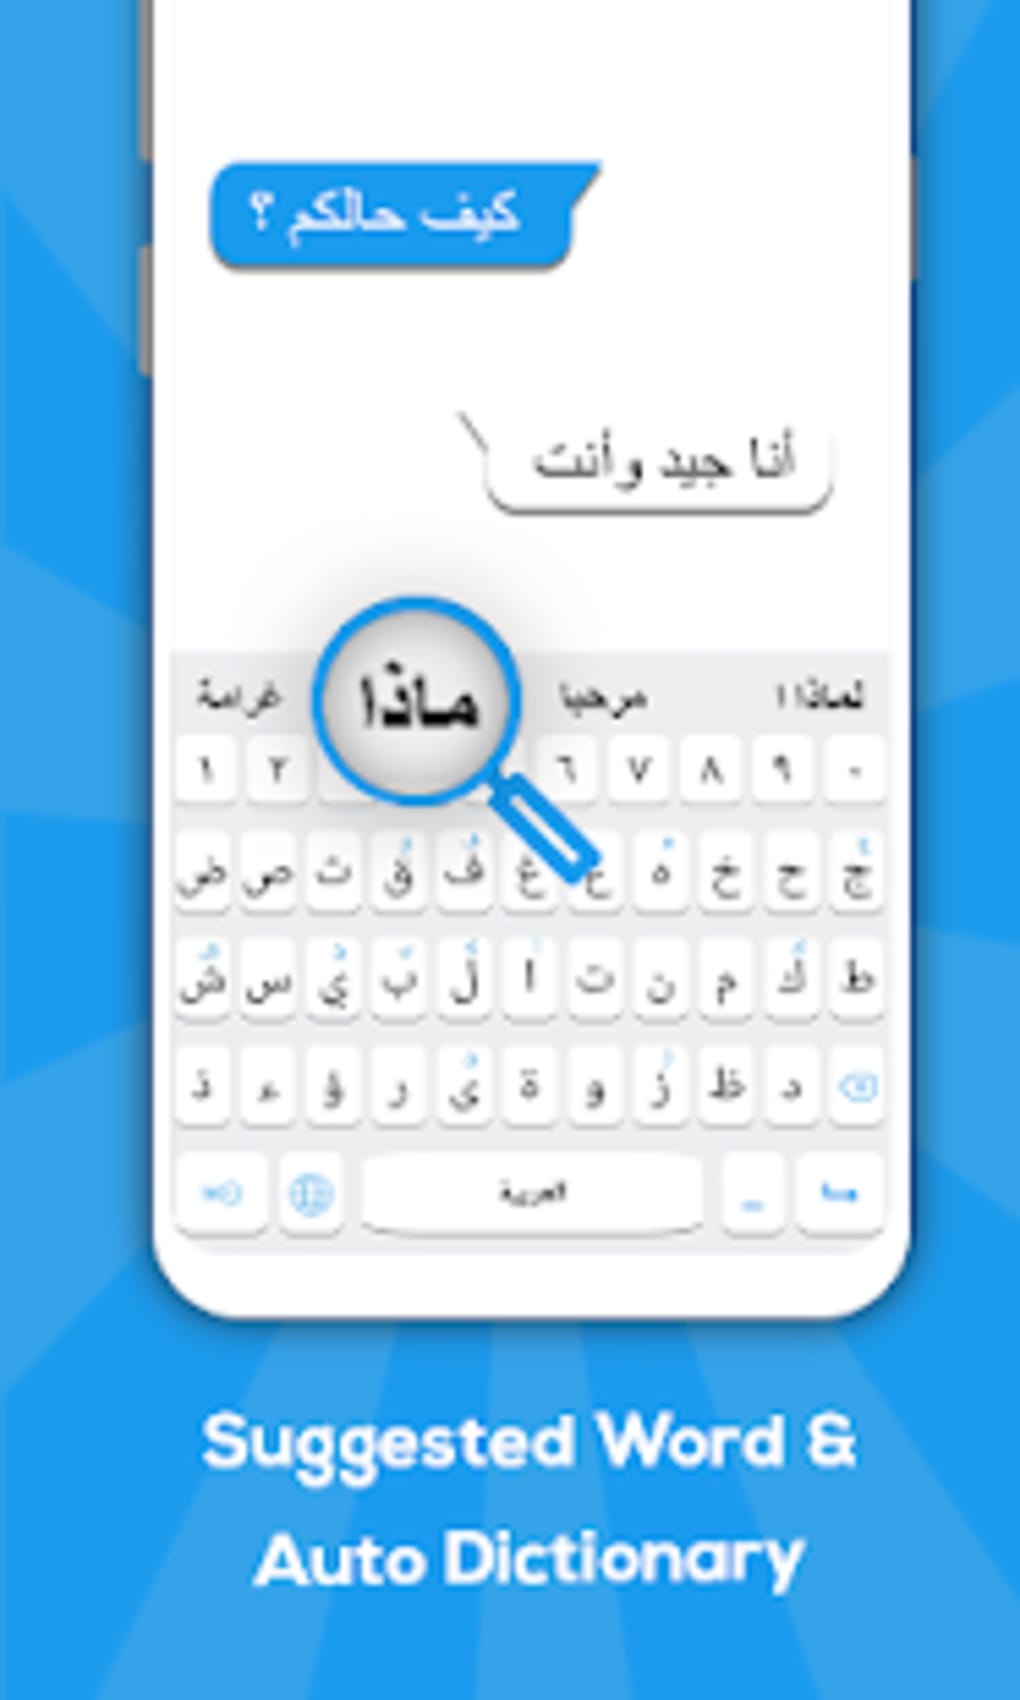 Arabic keyboard: Arabic Language Keyboard for Android ...